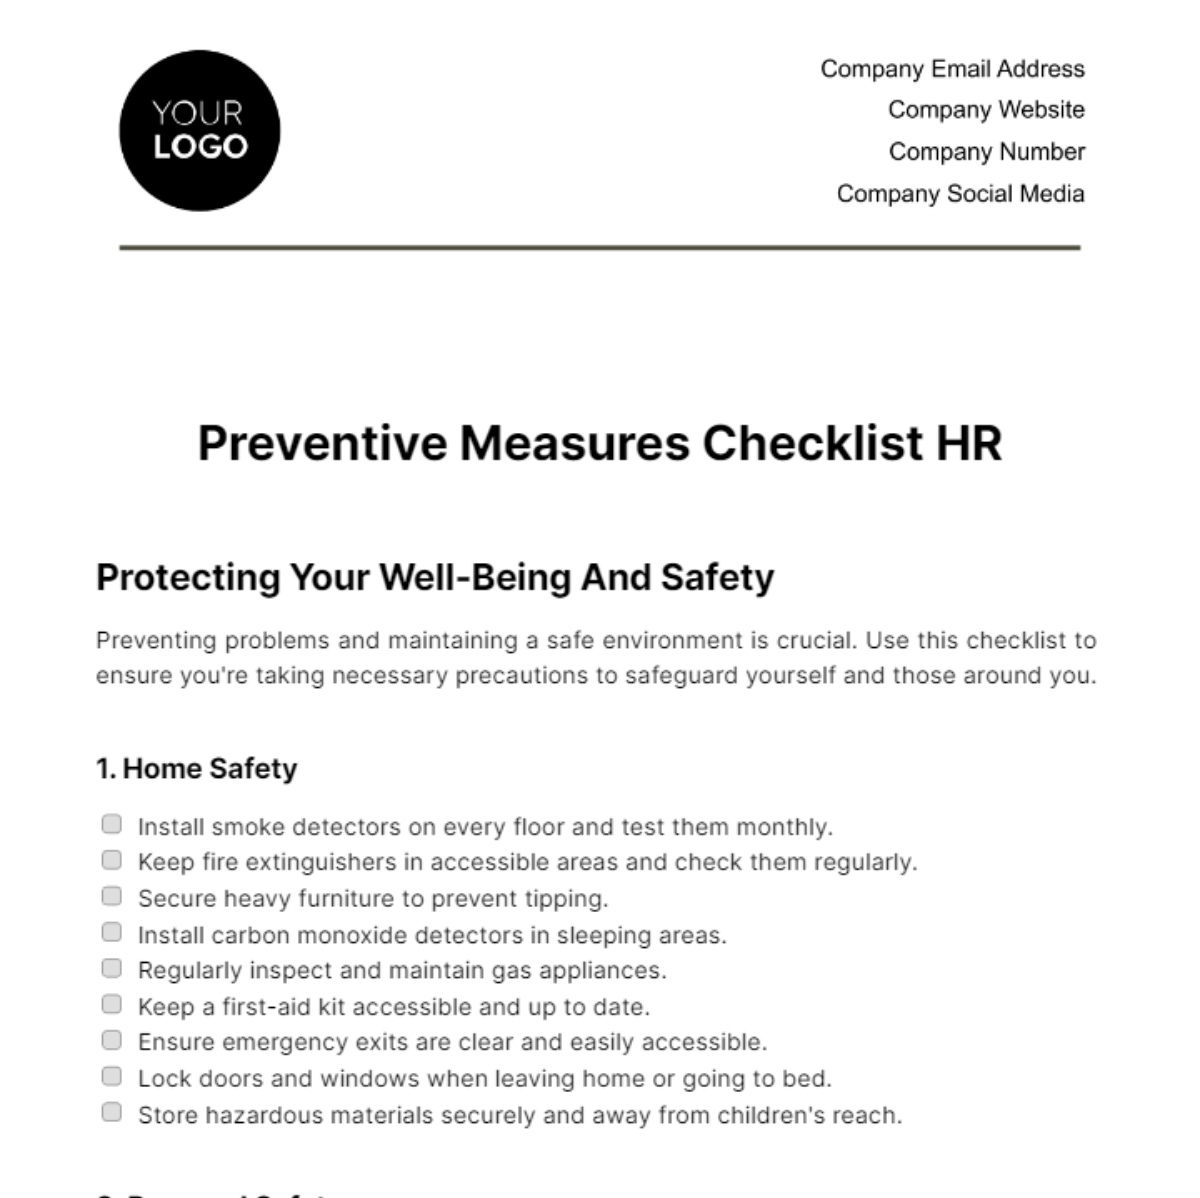 Preventive Measures Checklist HR Template